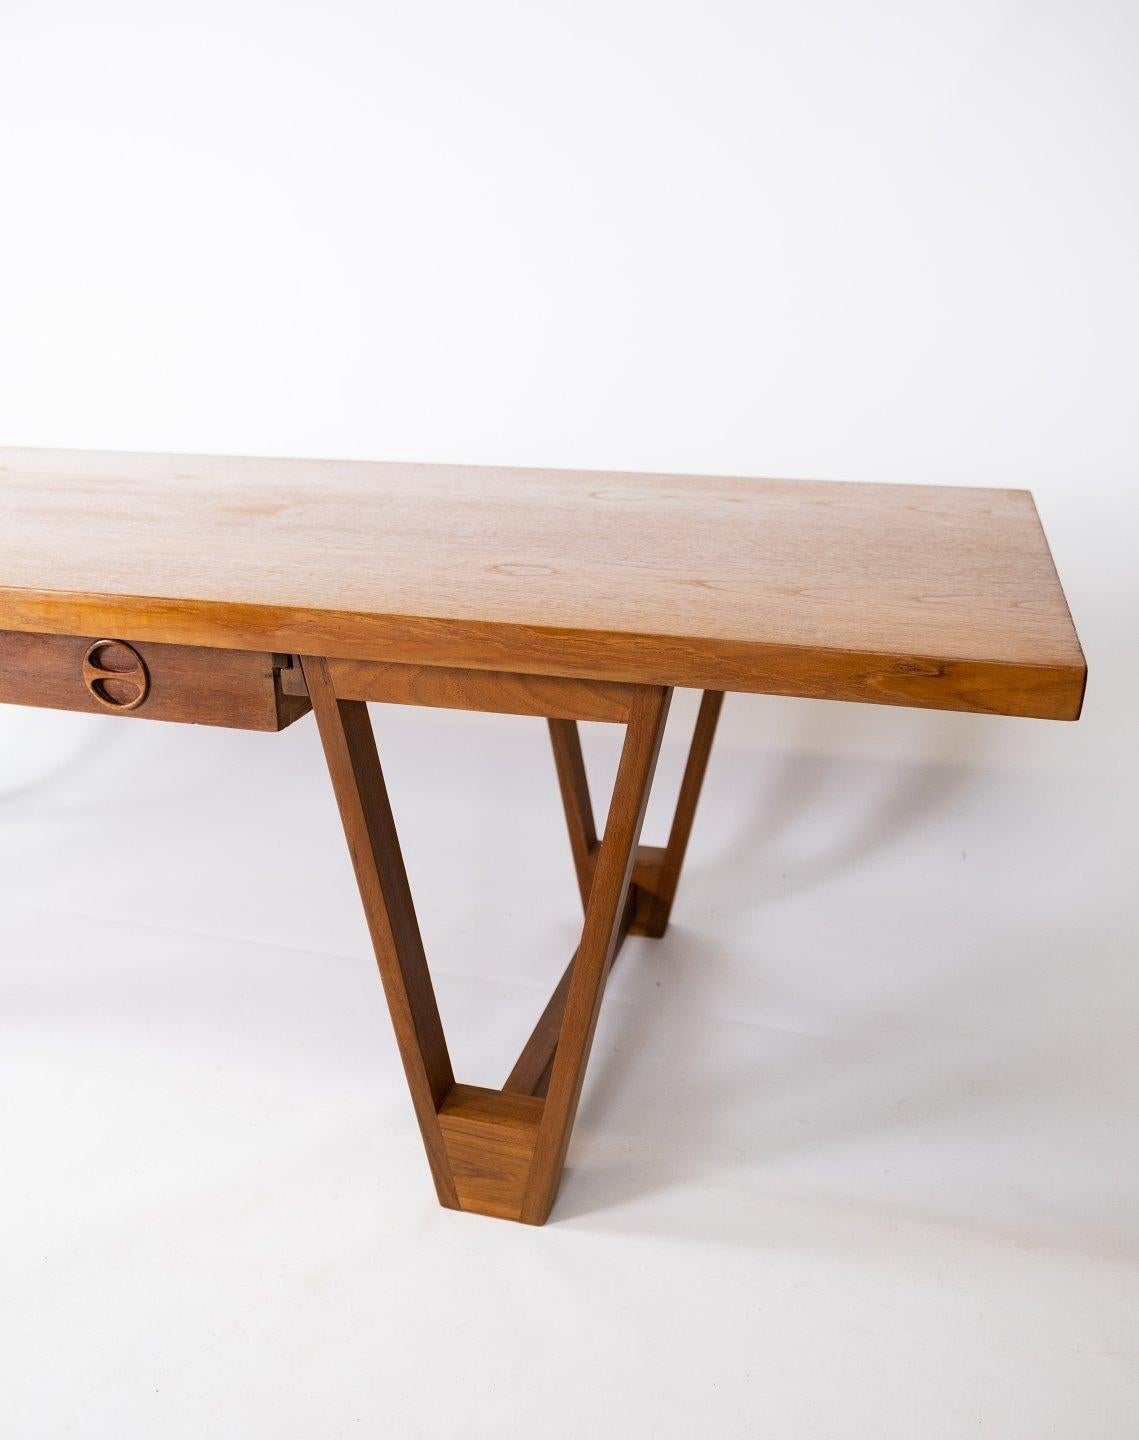 Scandinavian Modern Coffee Table in Teak Designed by Illum Wikkelsø from the 1960s For Sale